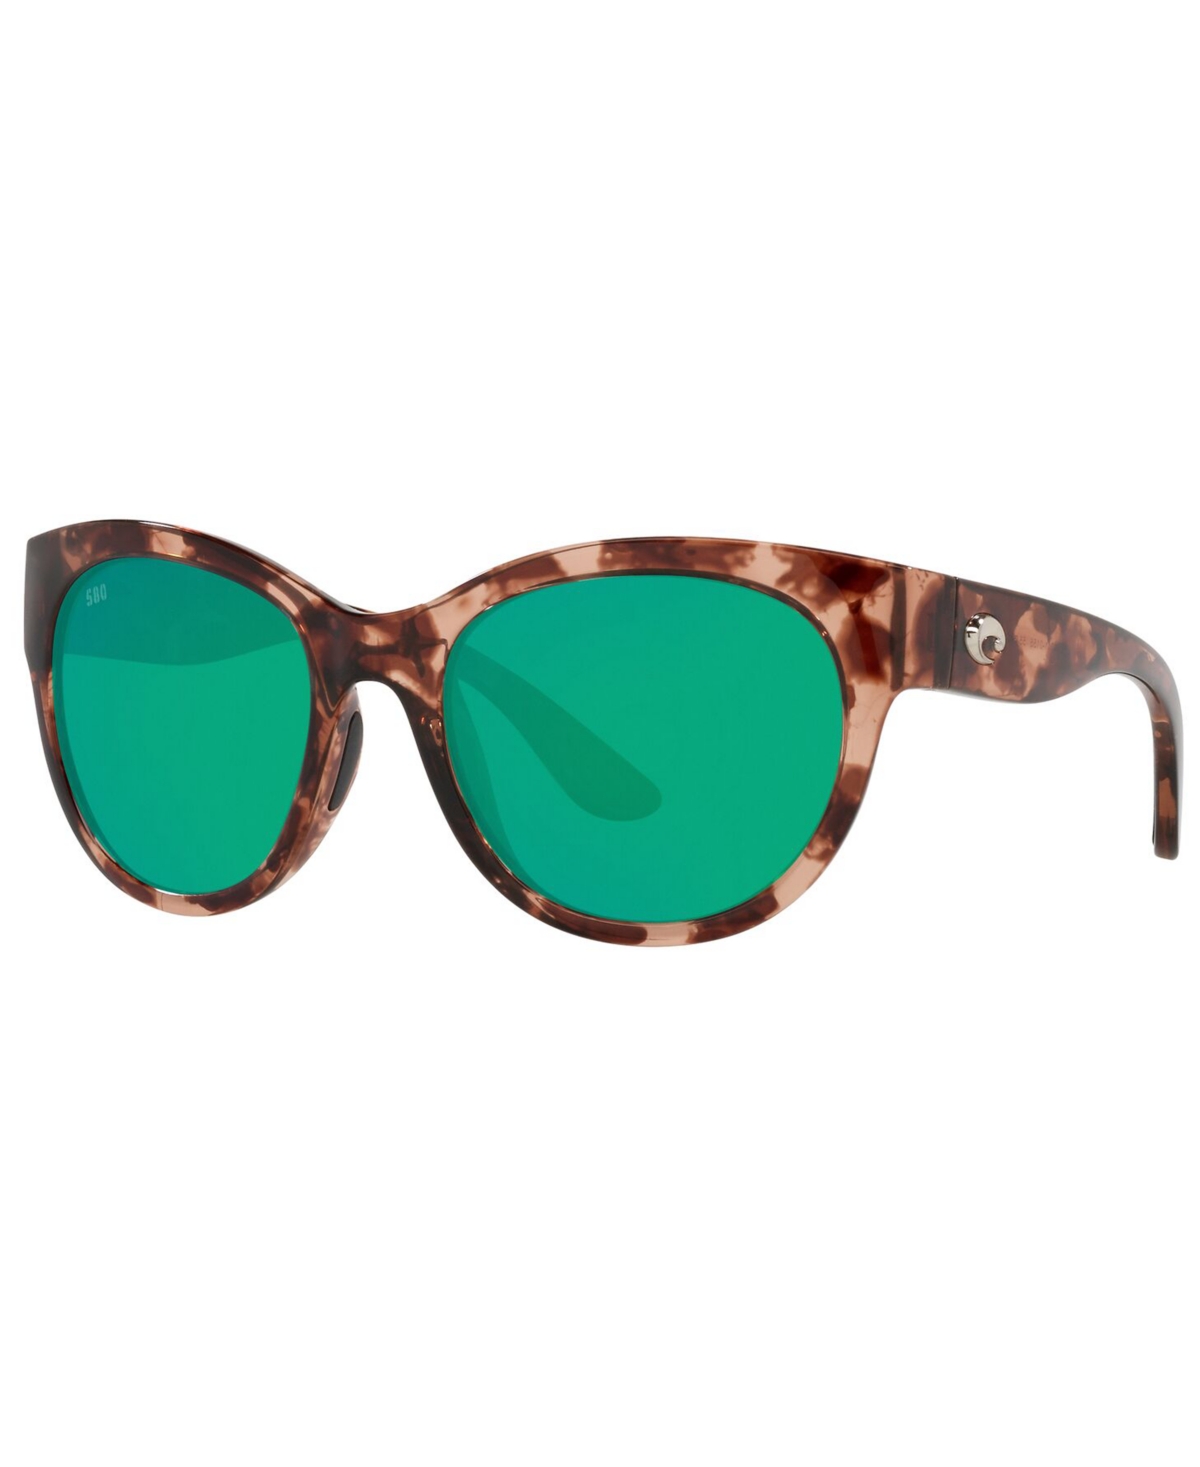 Maya Polarized Sunglasses, 6S9011 55 - SHINY CORAL TORTOISE/GREEN MIRROR G